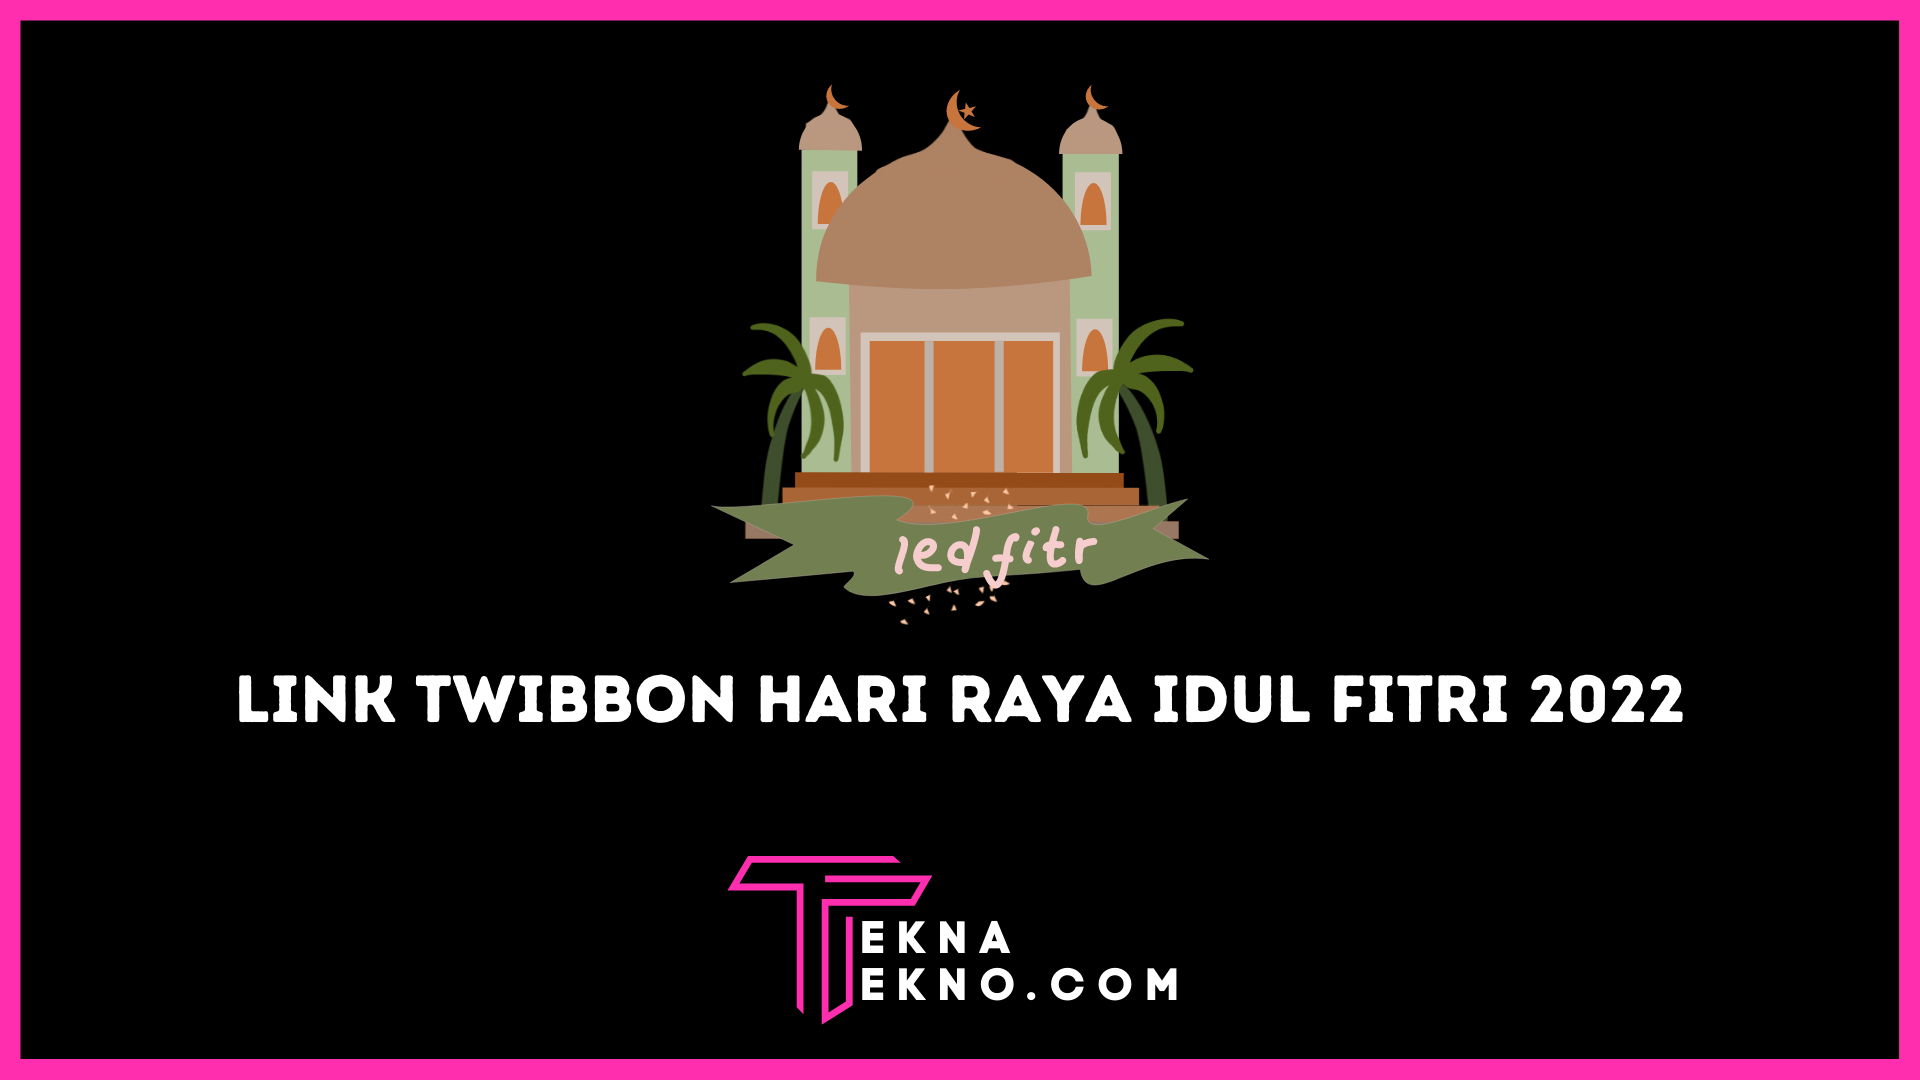 Kumpulan Link Twibbon Hari Raya Idul Fitri 2022 1443 H